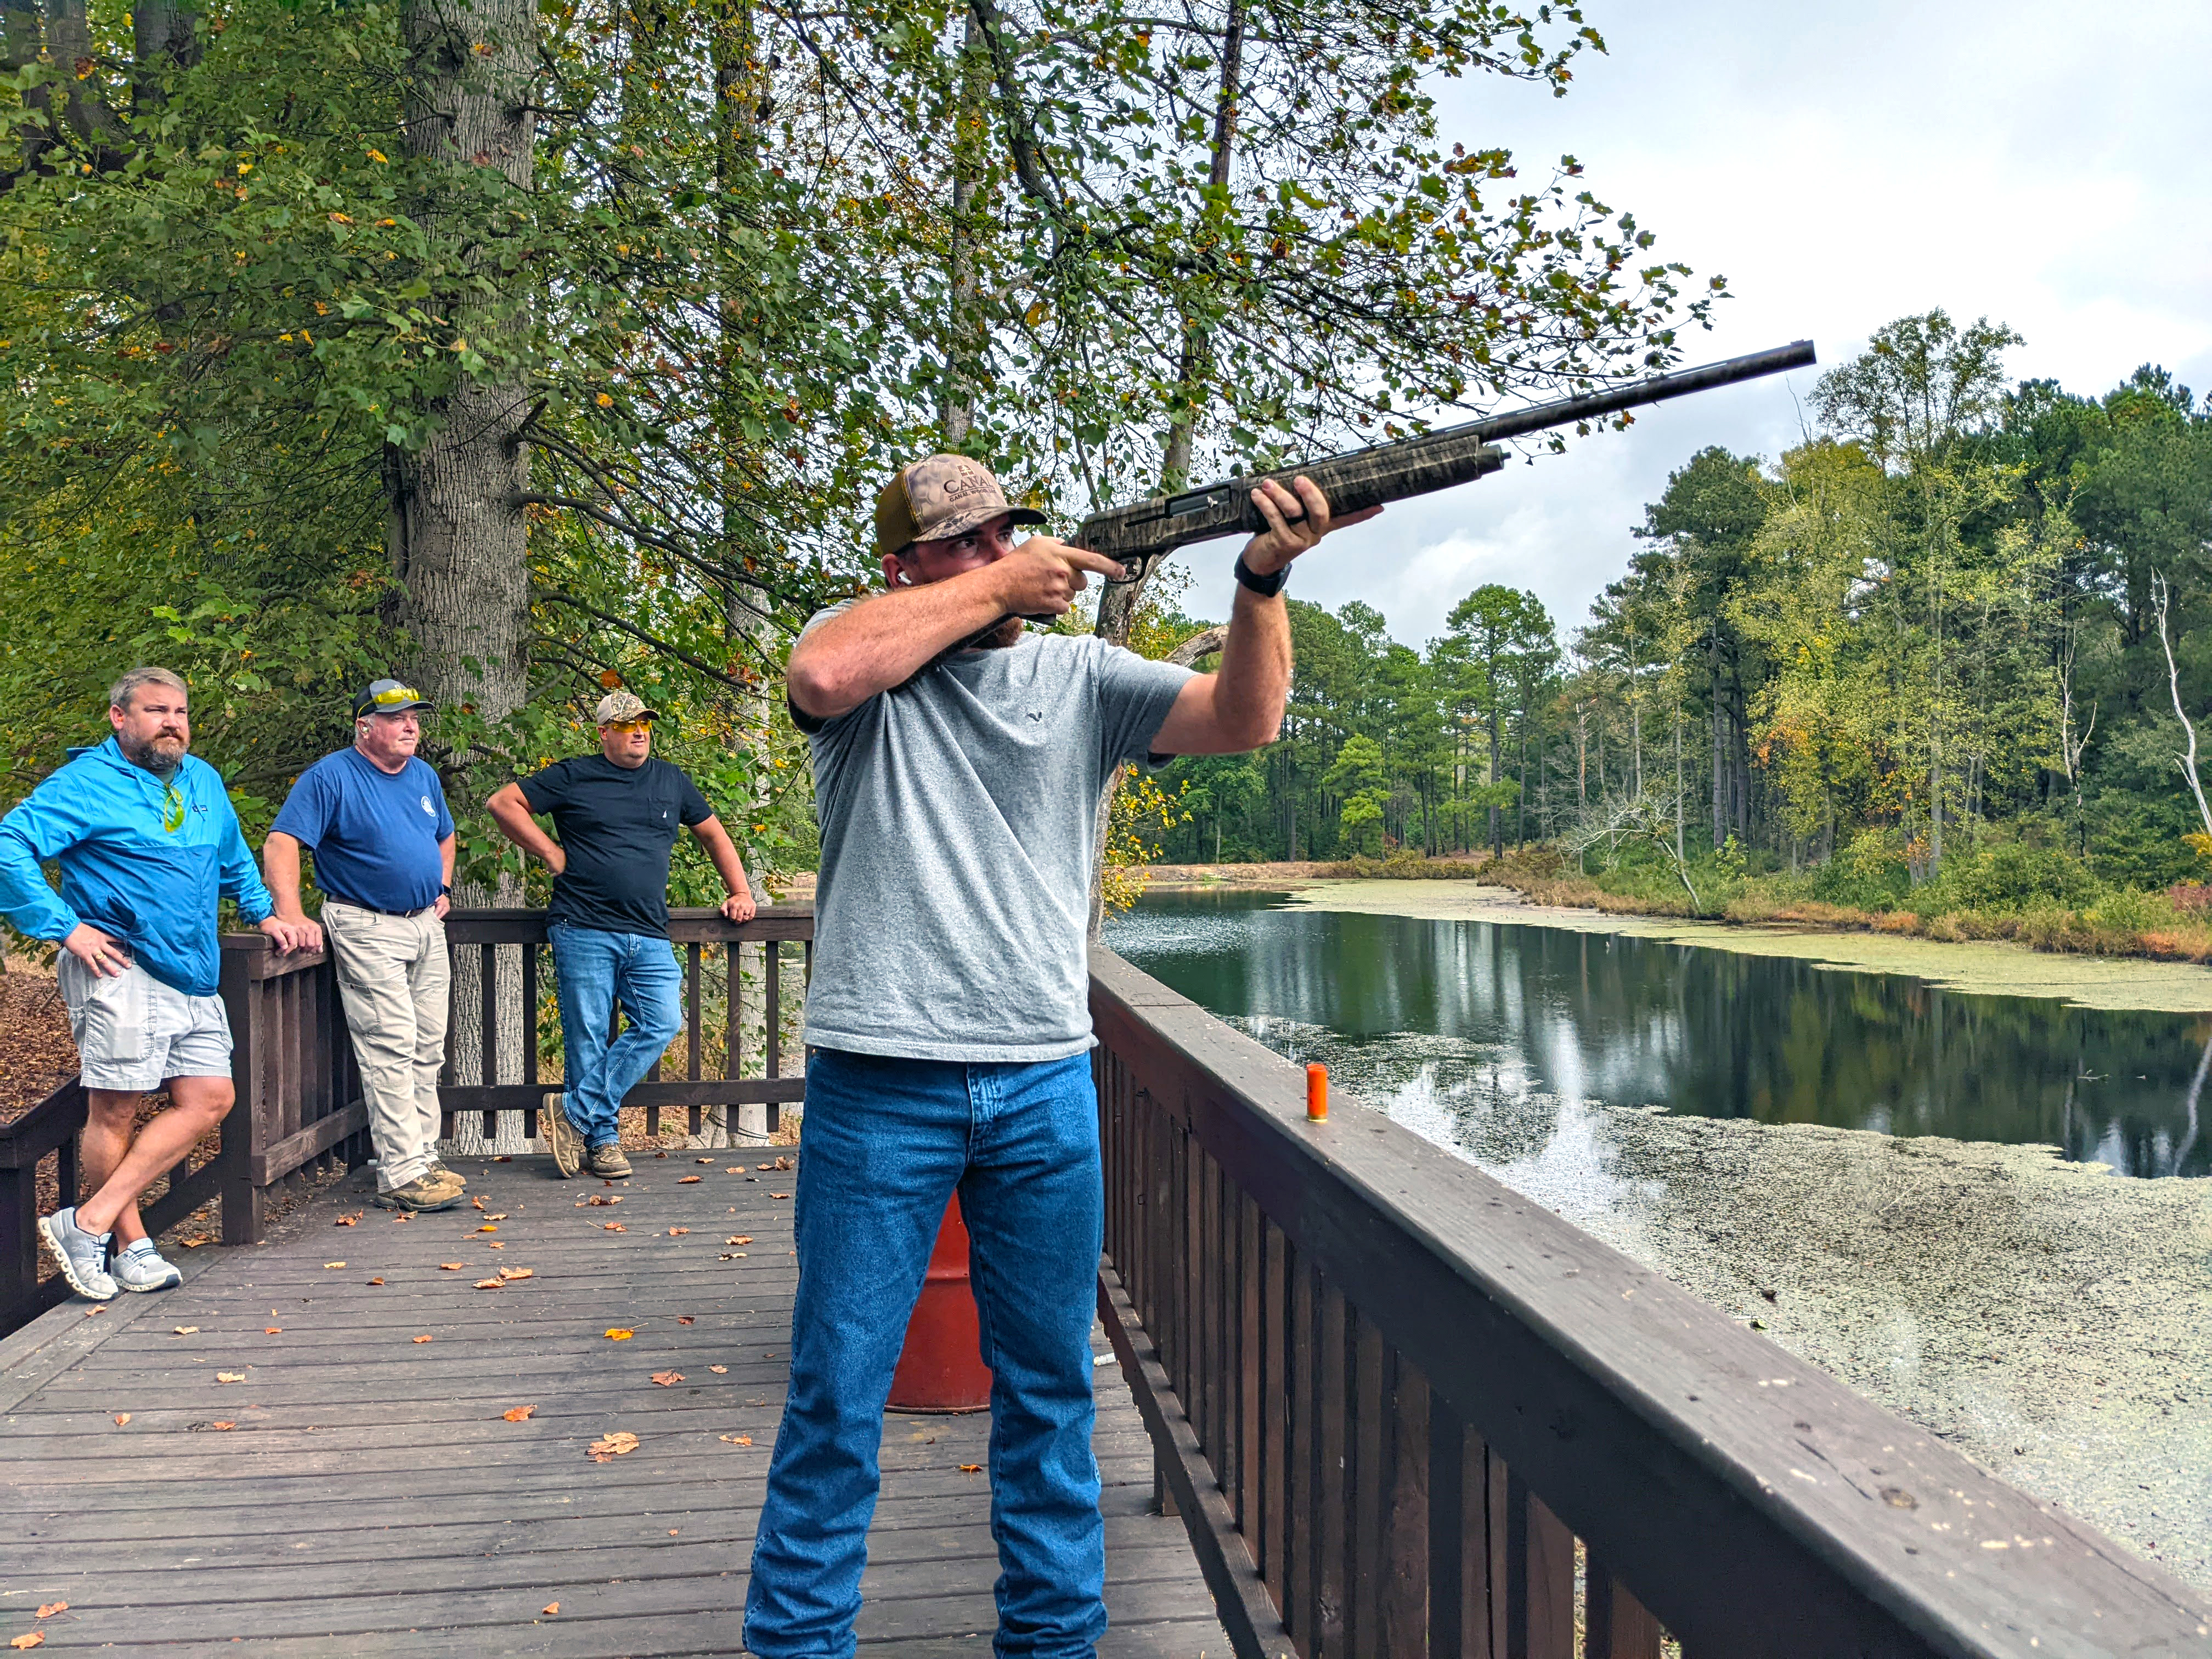 Clay shoot participants aims his shotgun over the pond